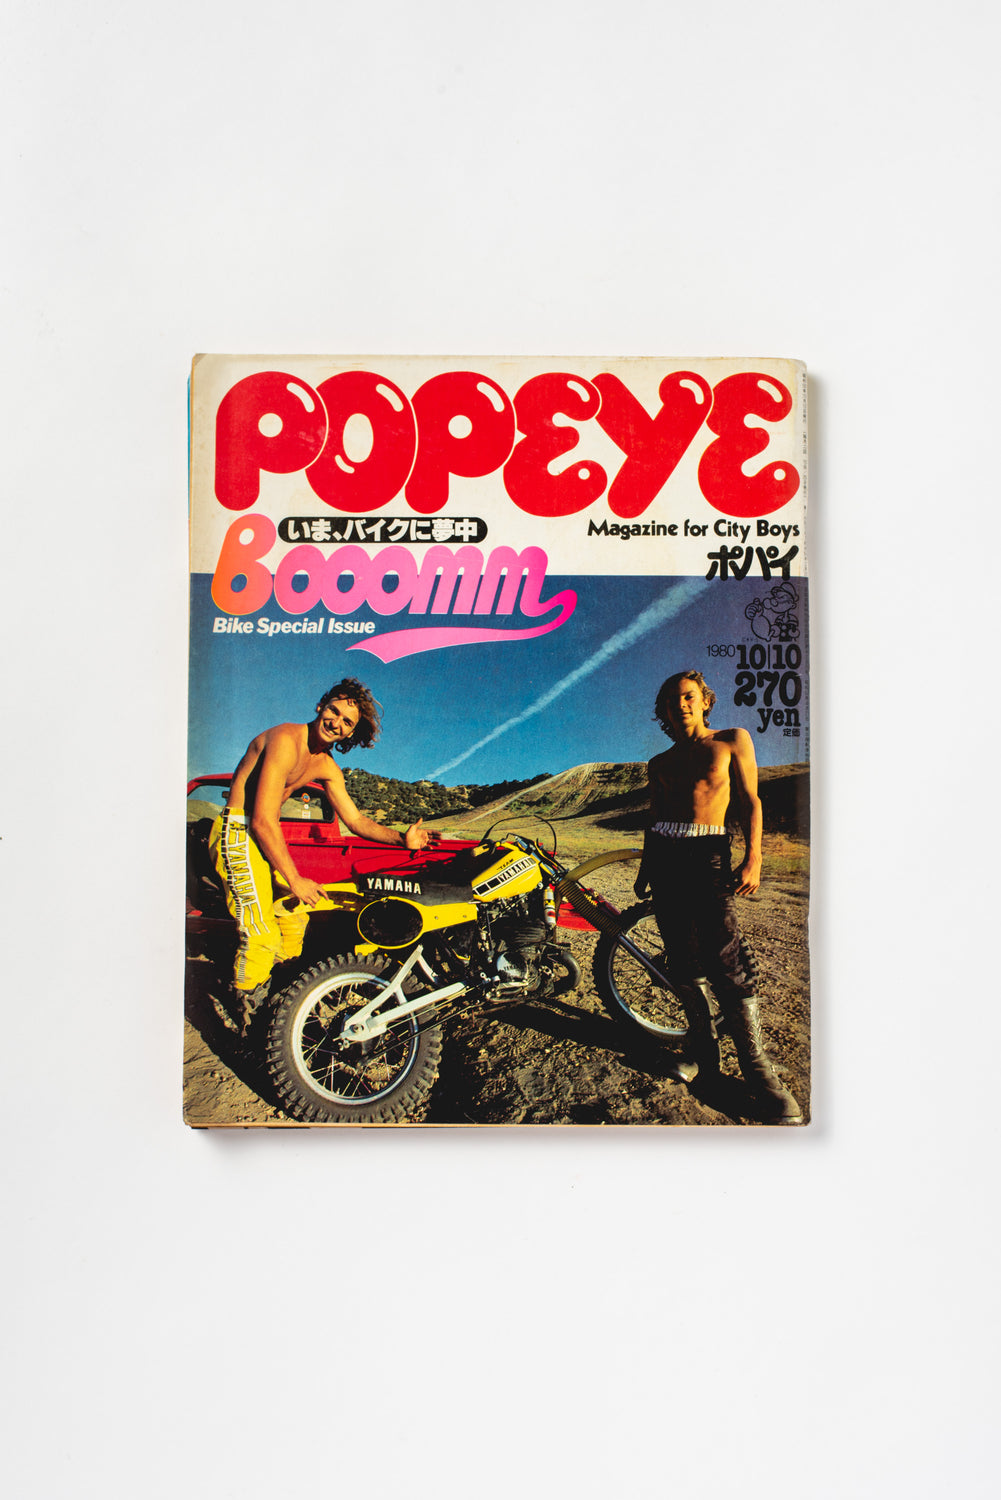 Vintage Popeye Magazine, 1980 Bike Special Isuue